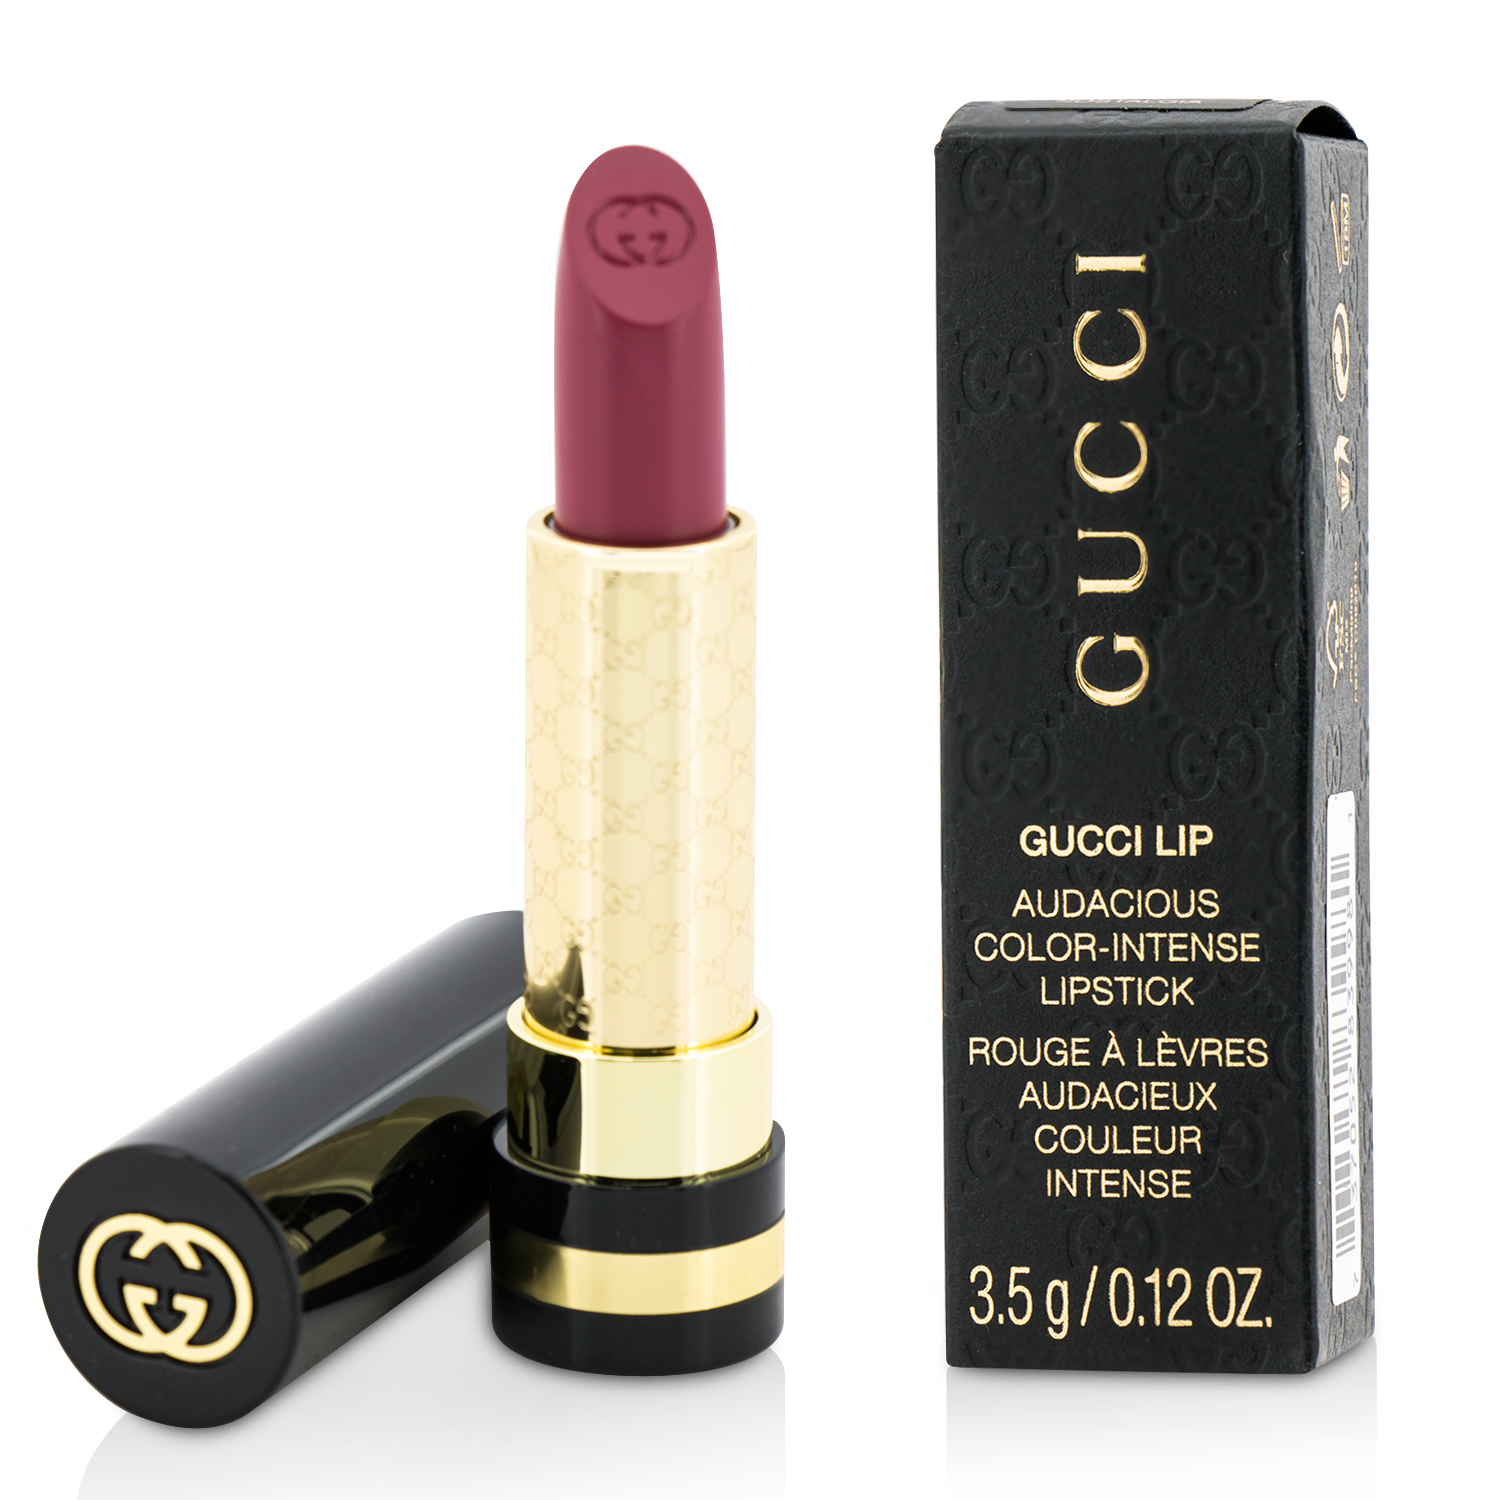 Audacious Color Intense Lipstick - #170 Aegean Pink Gucci Image